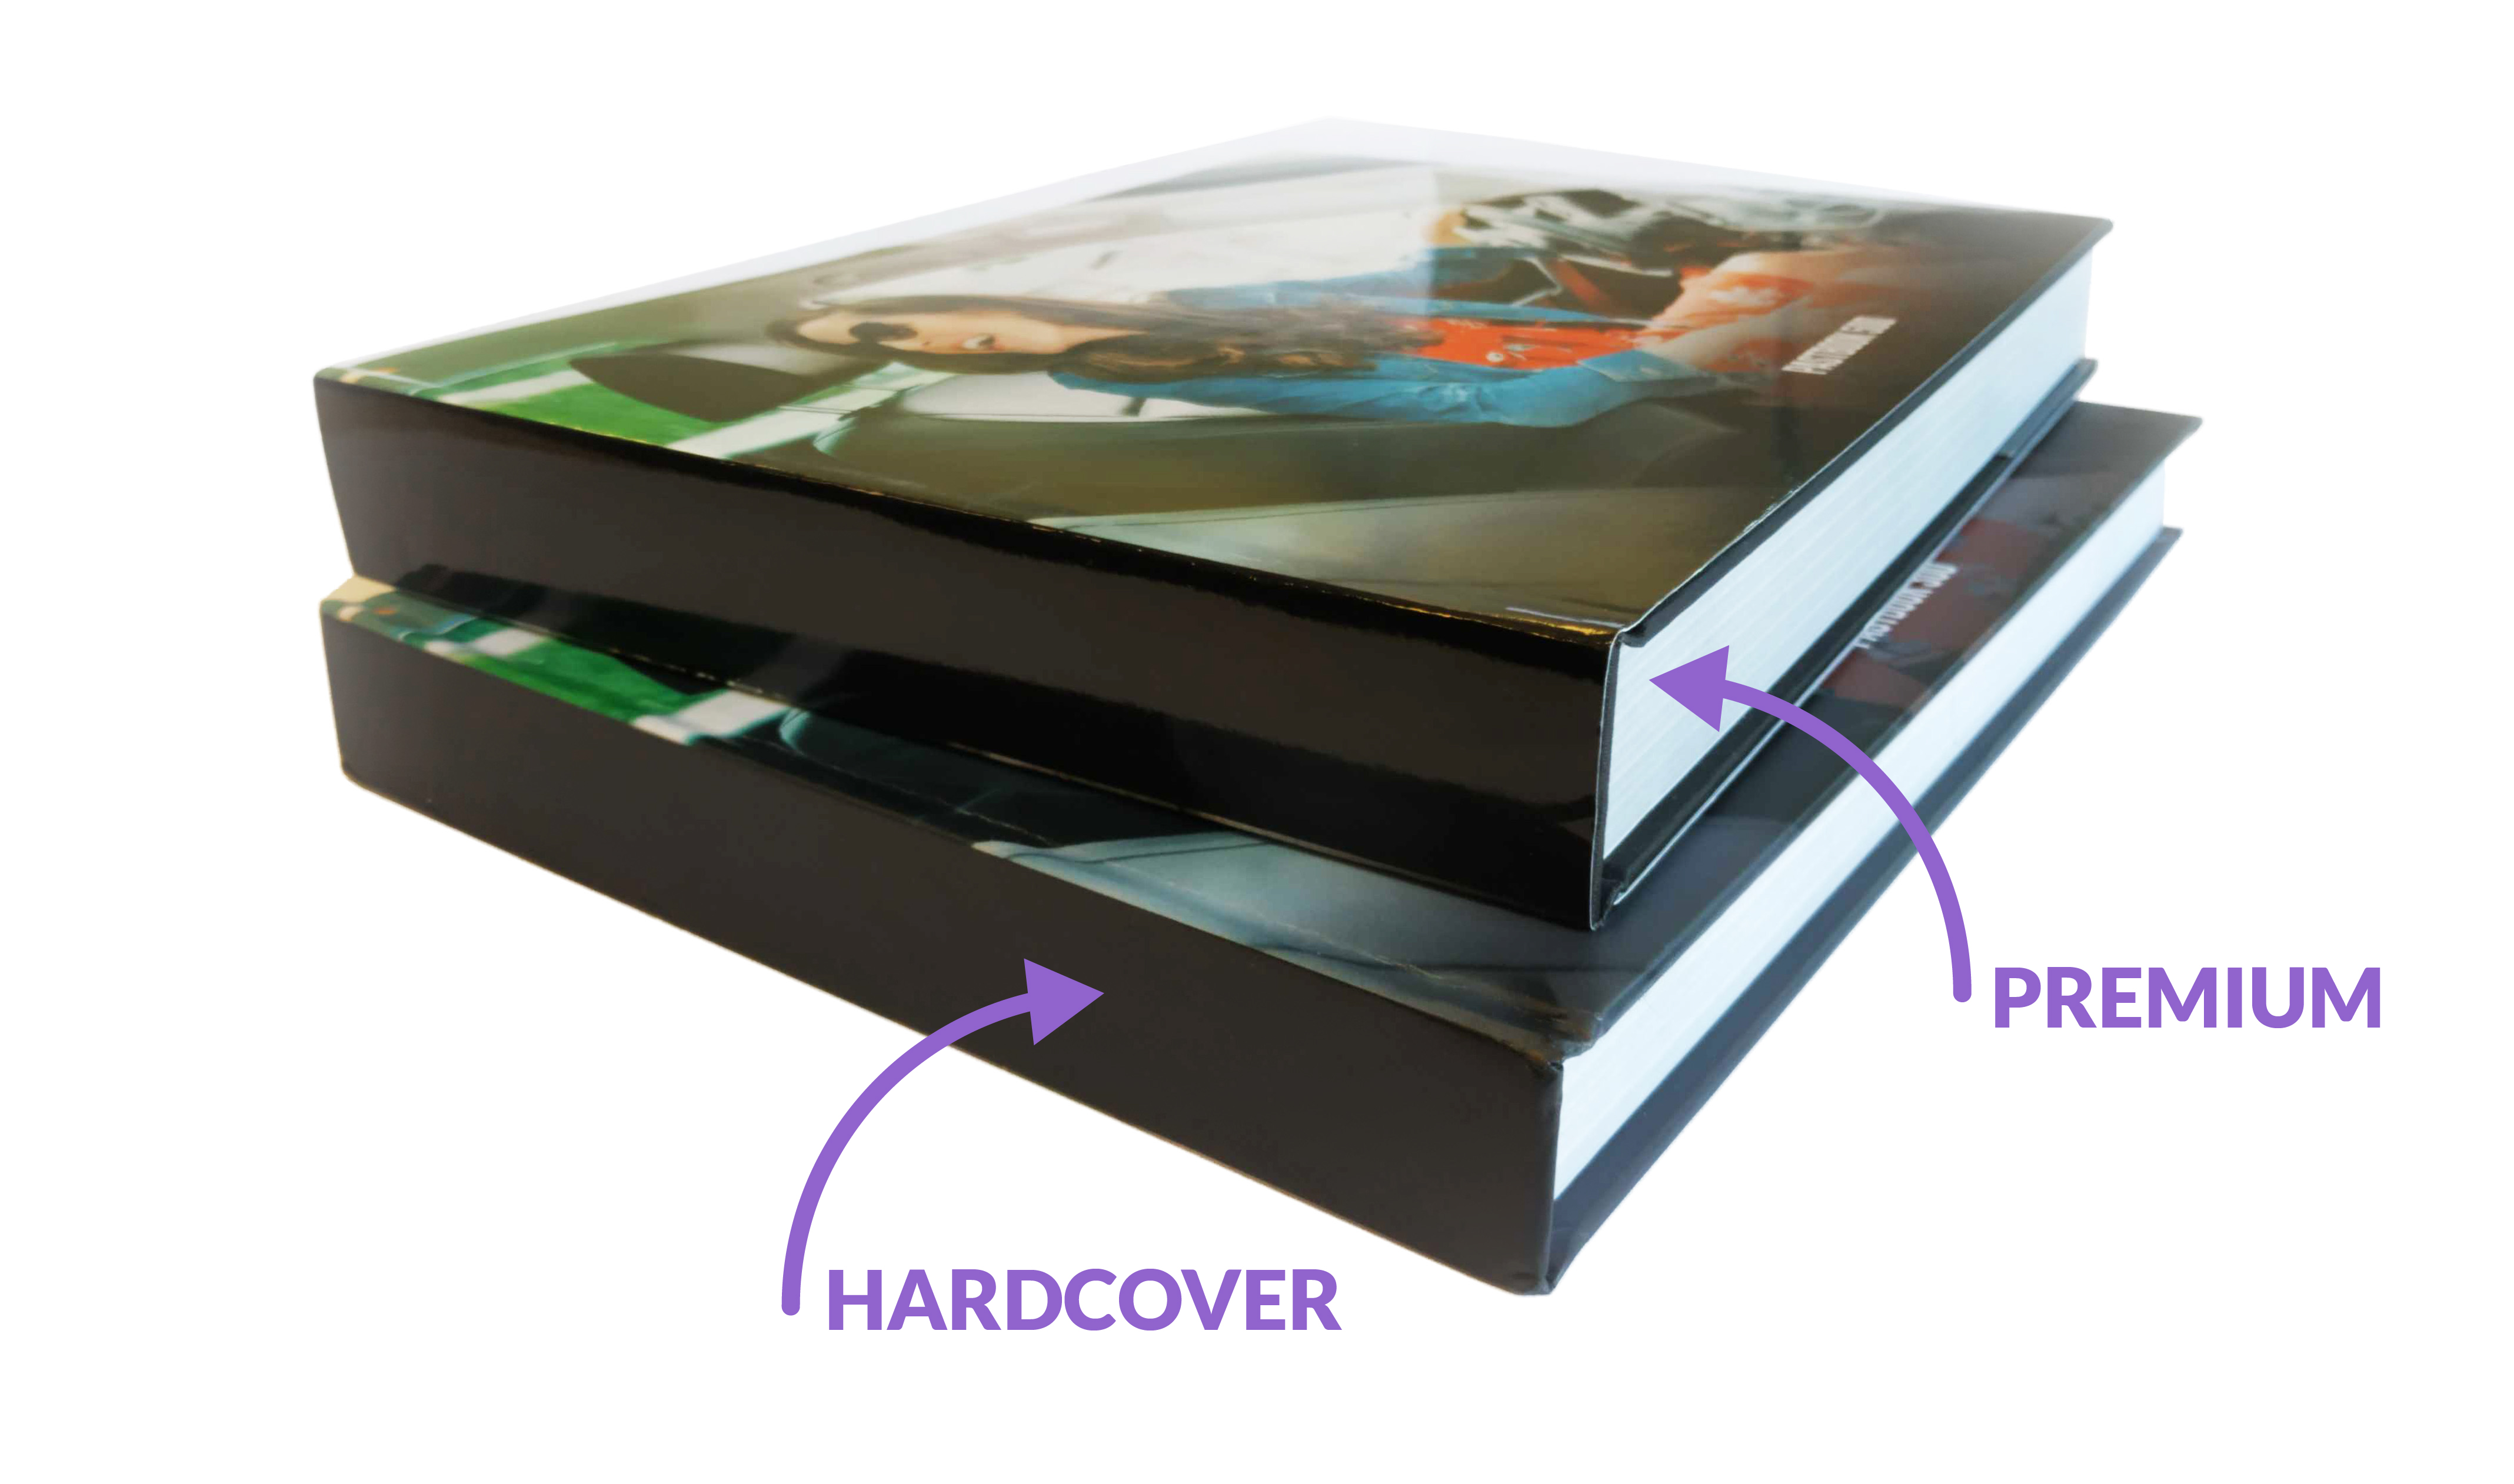 Hardcover_vs_Premium.jpeg